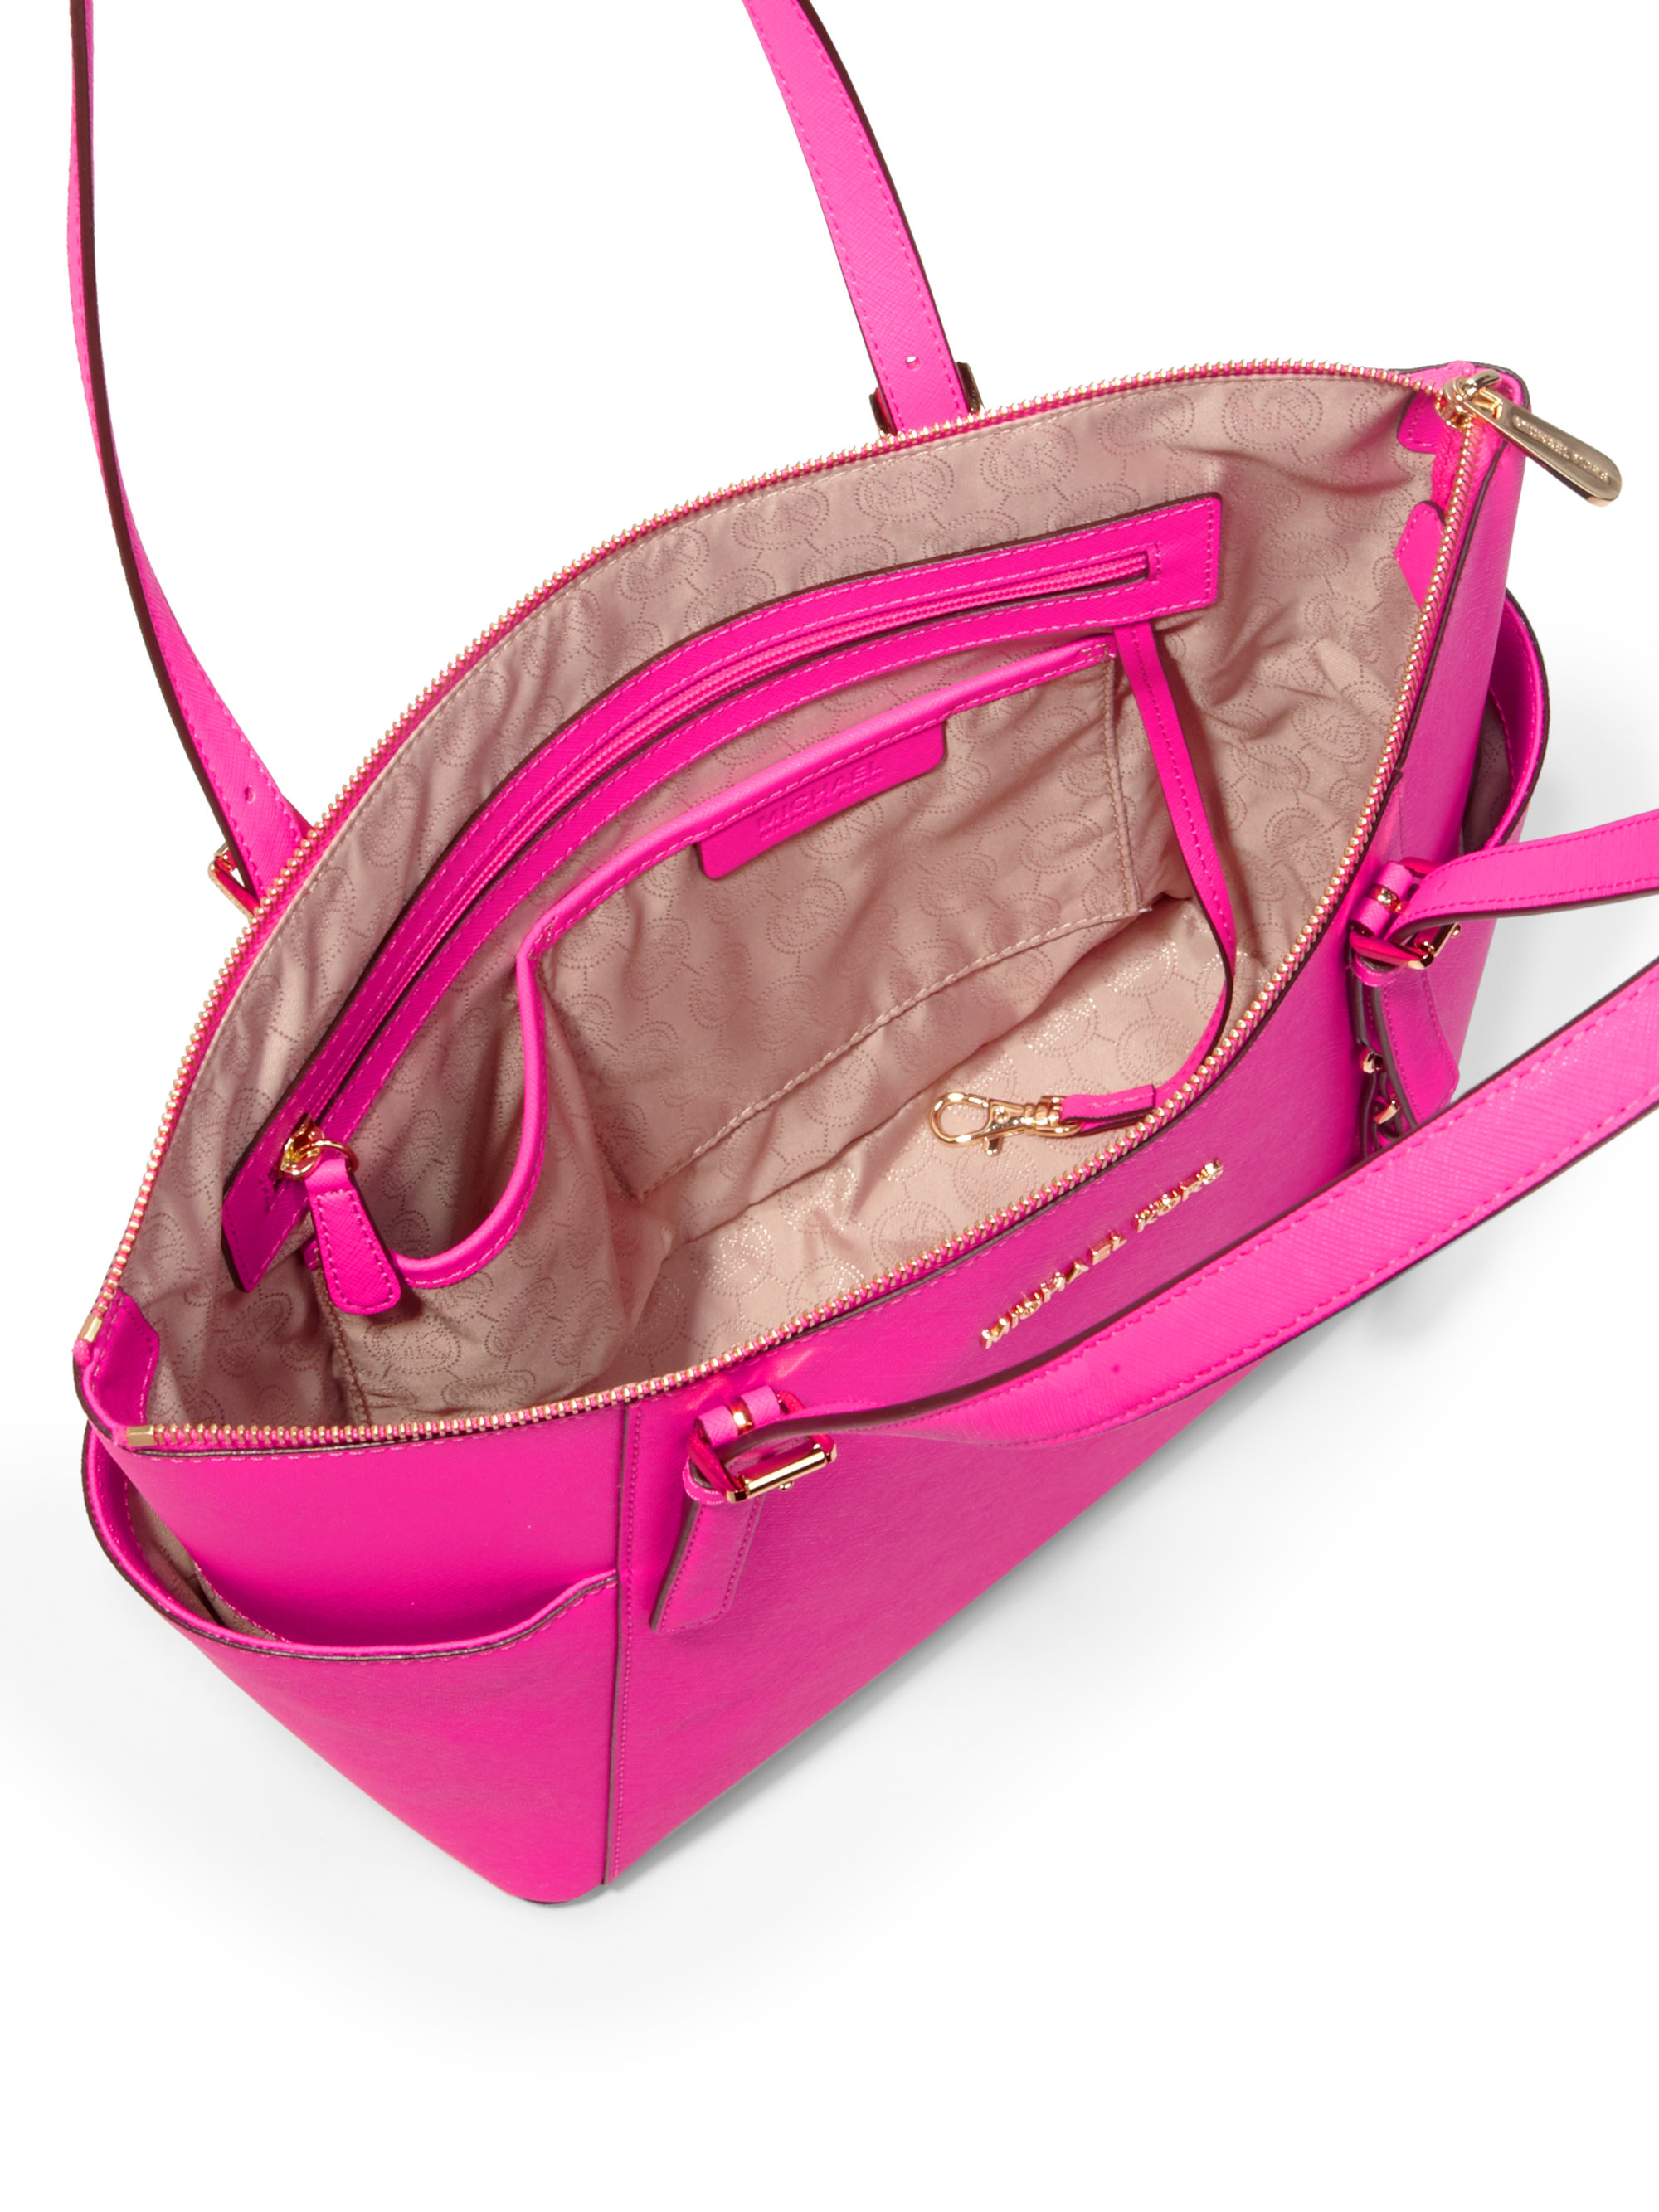 bright pink michael kors purse